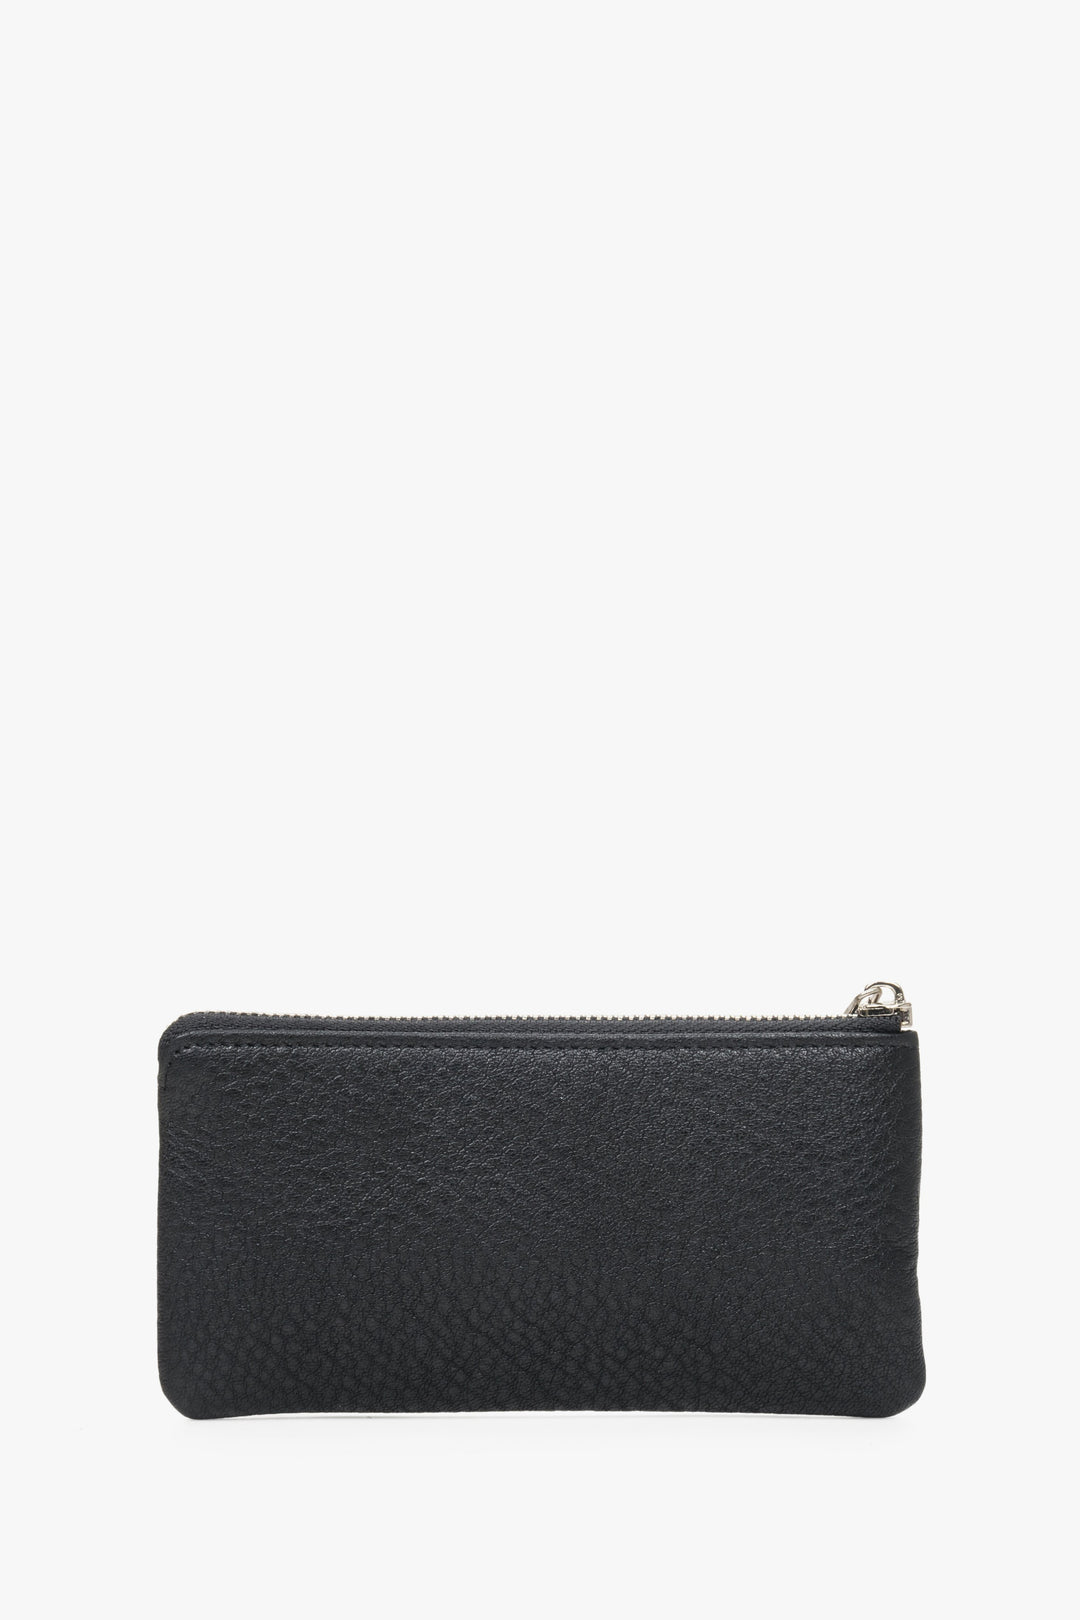 A black Estro leather key case - reverse.